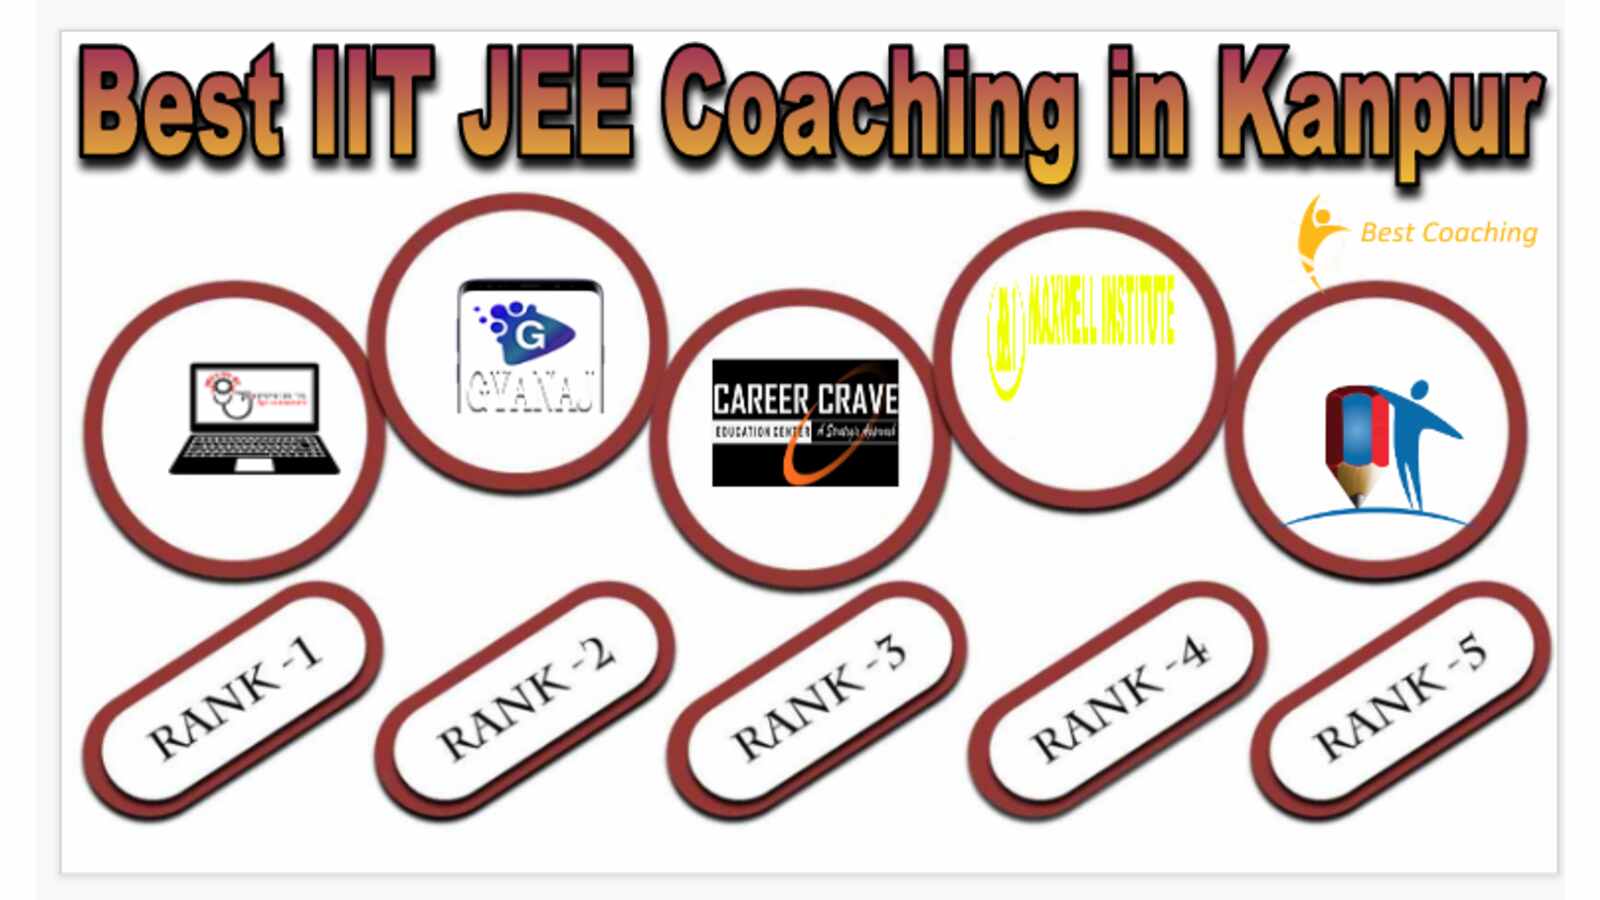 Best IIT JEE Coaching in Kanpur